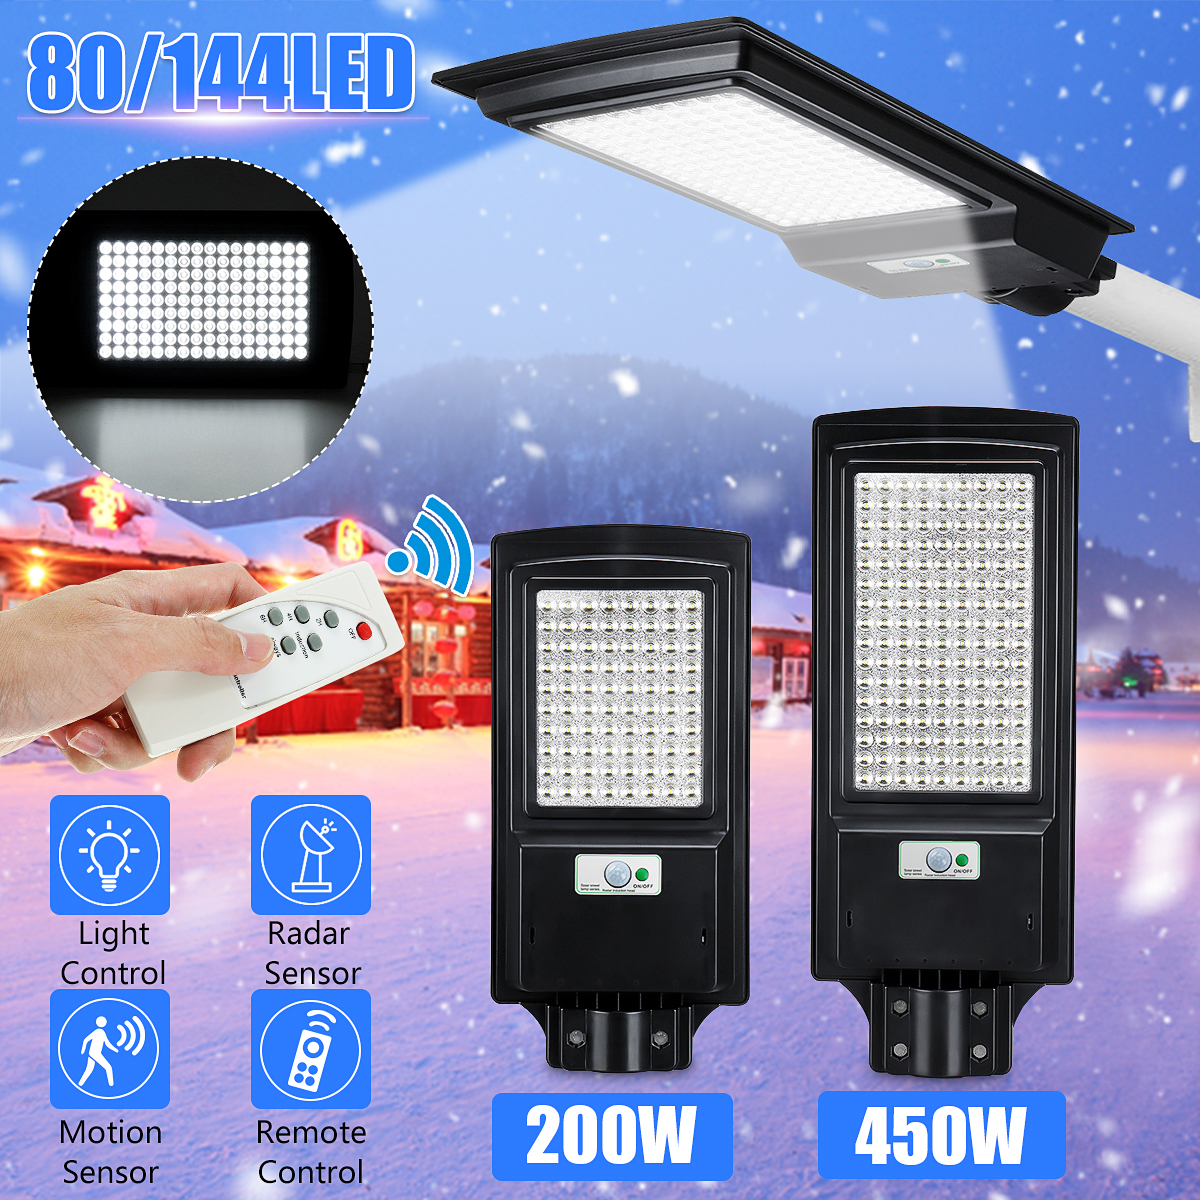 80144LED-Solar-Street-Light-PIR-Motion-Sensor-Outdoor-Wall-Lamp-Waterproof-1644429-1